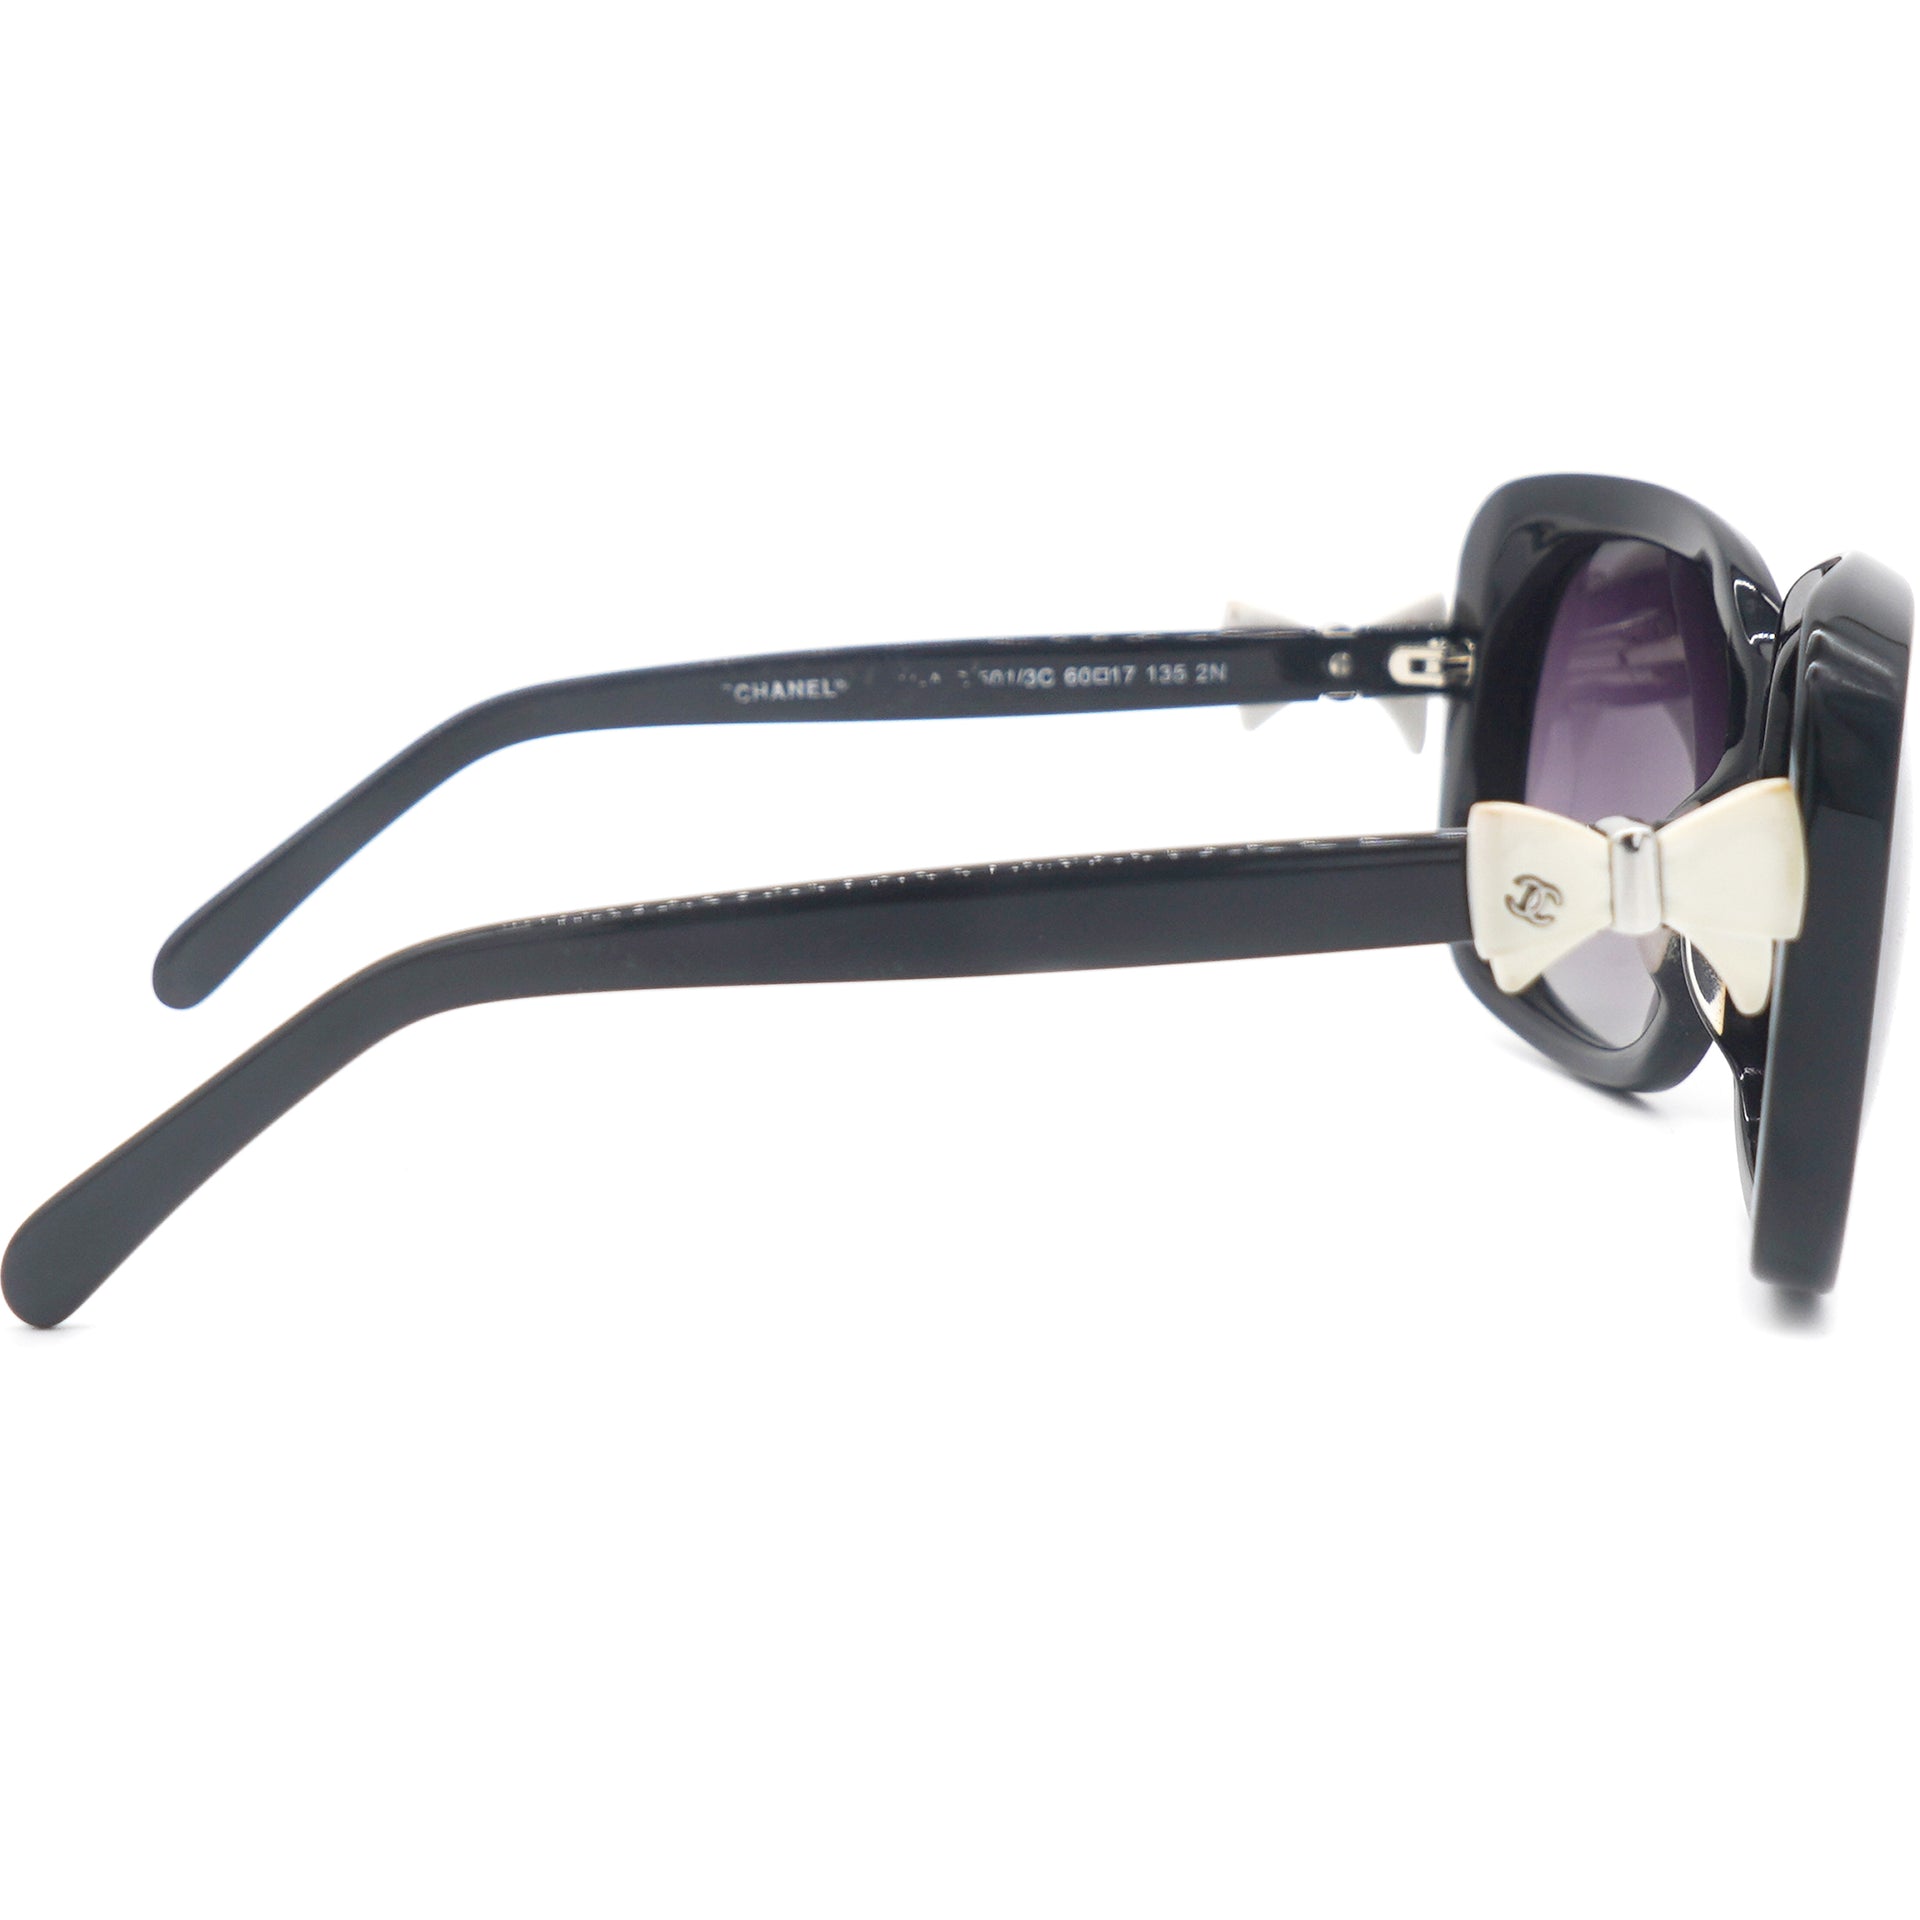 Purple Polarized Bow Square Gradient Sunglasses